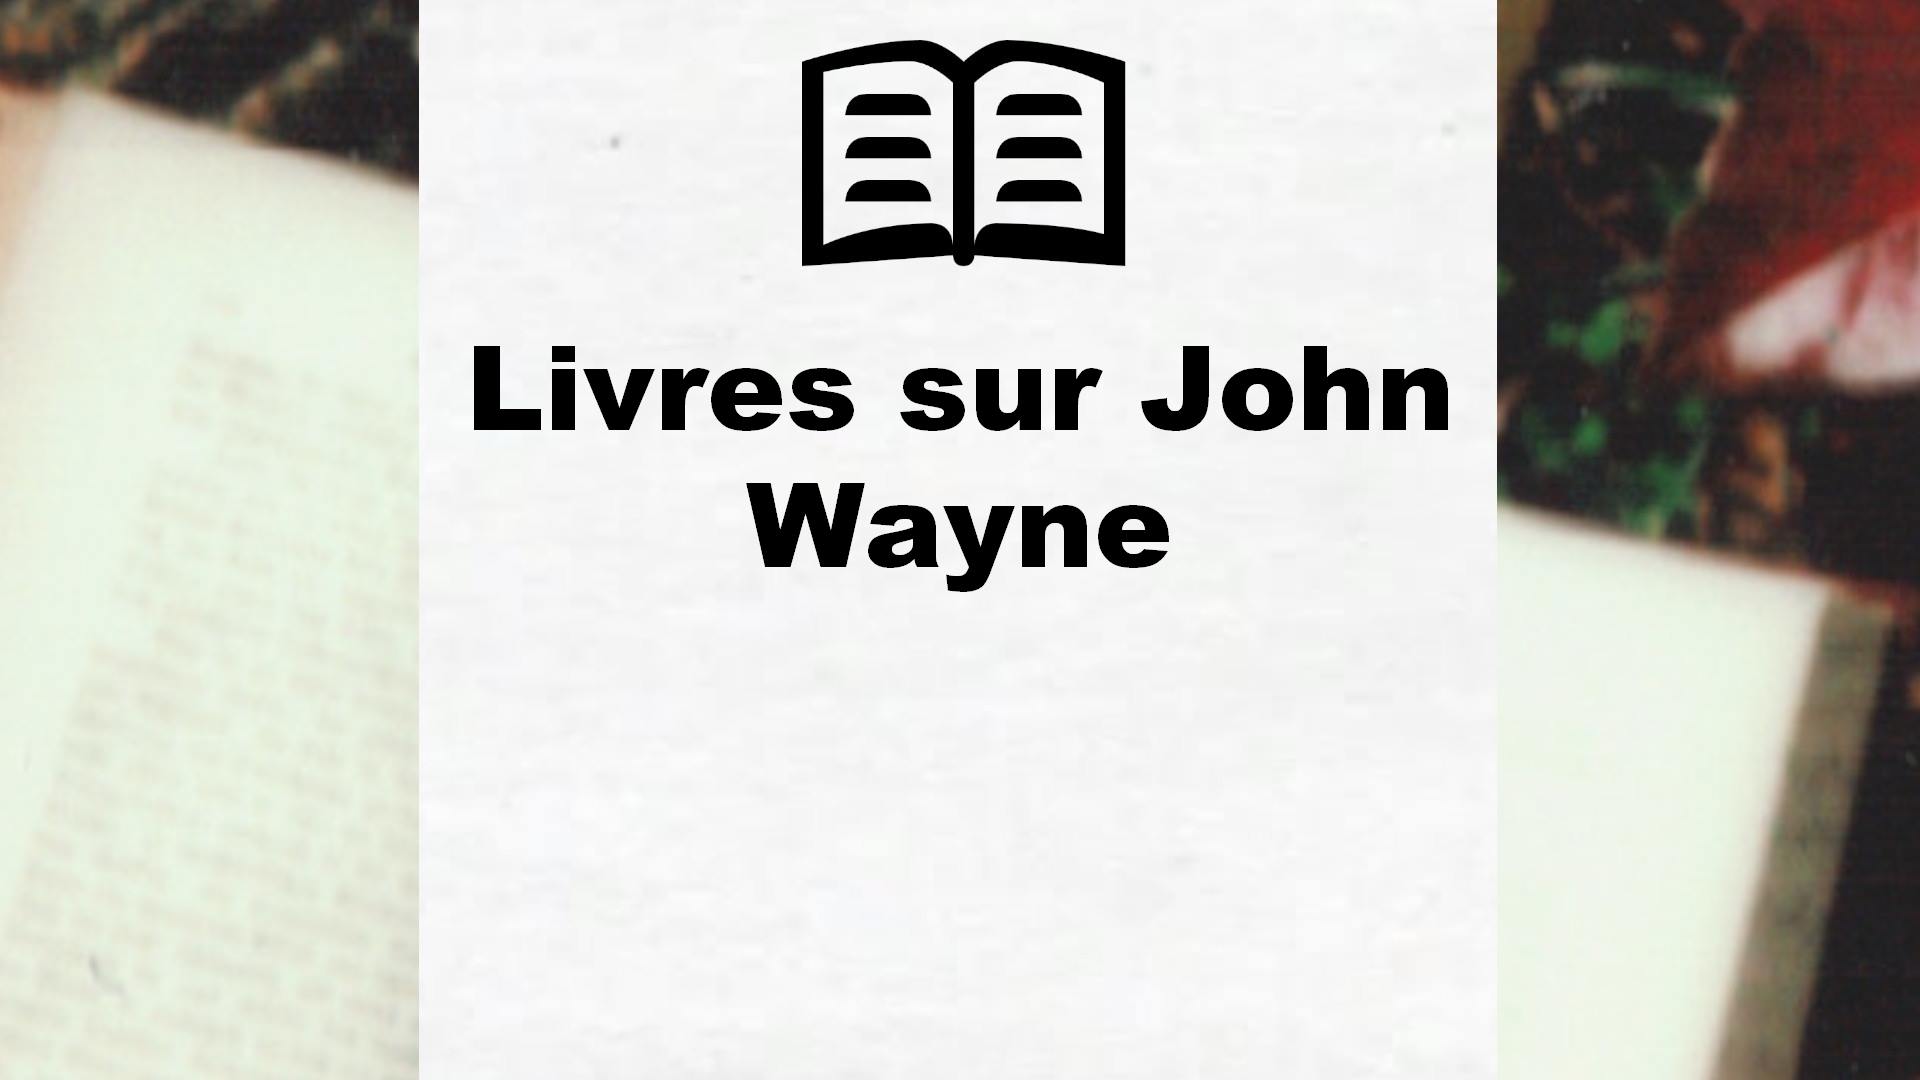 Livres sur John Wayne